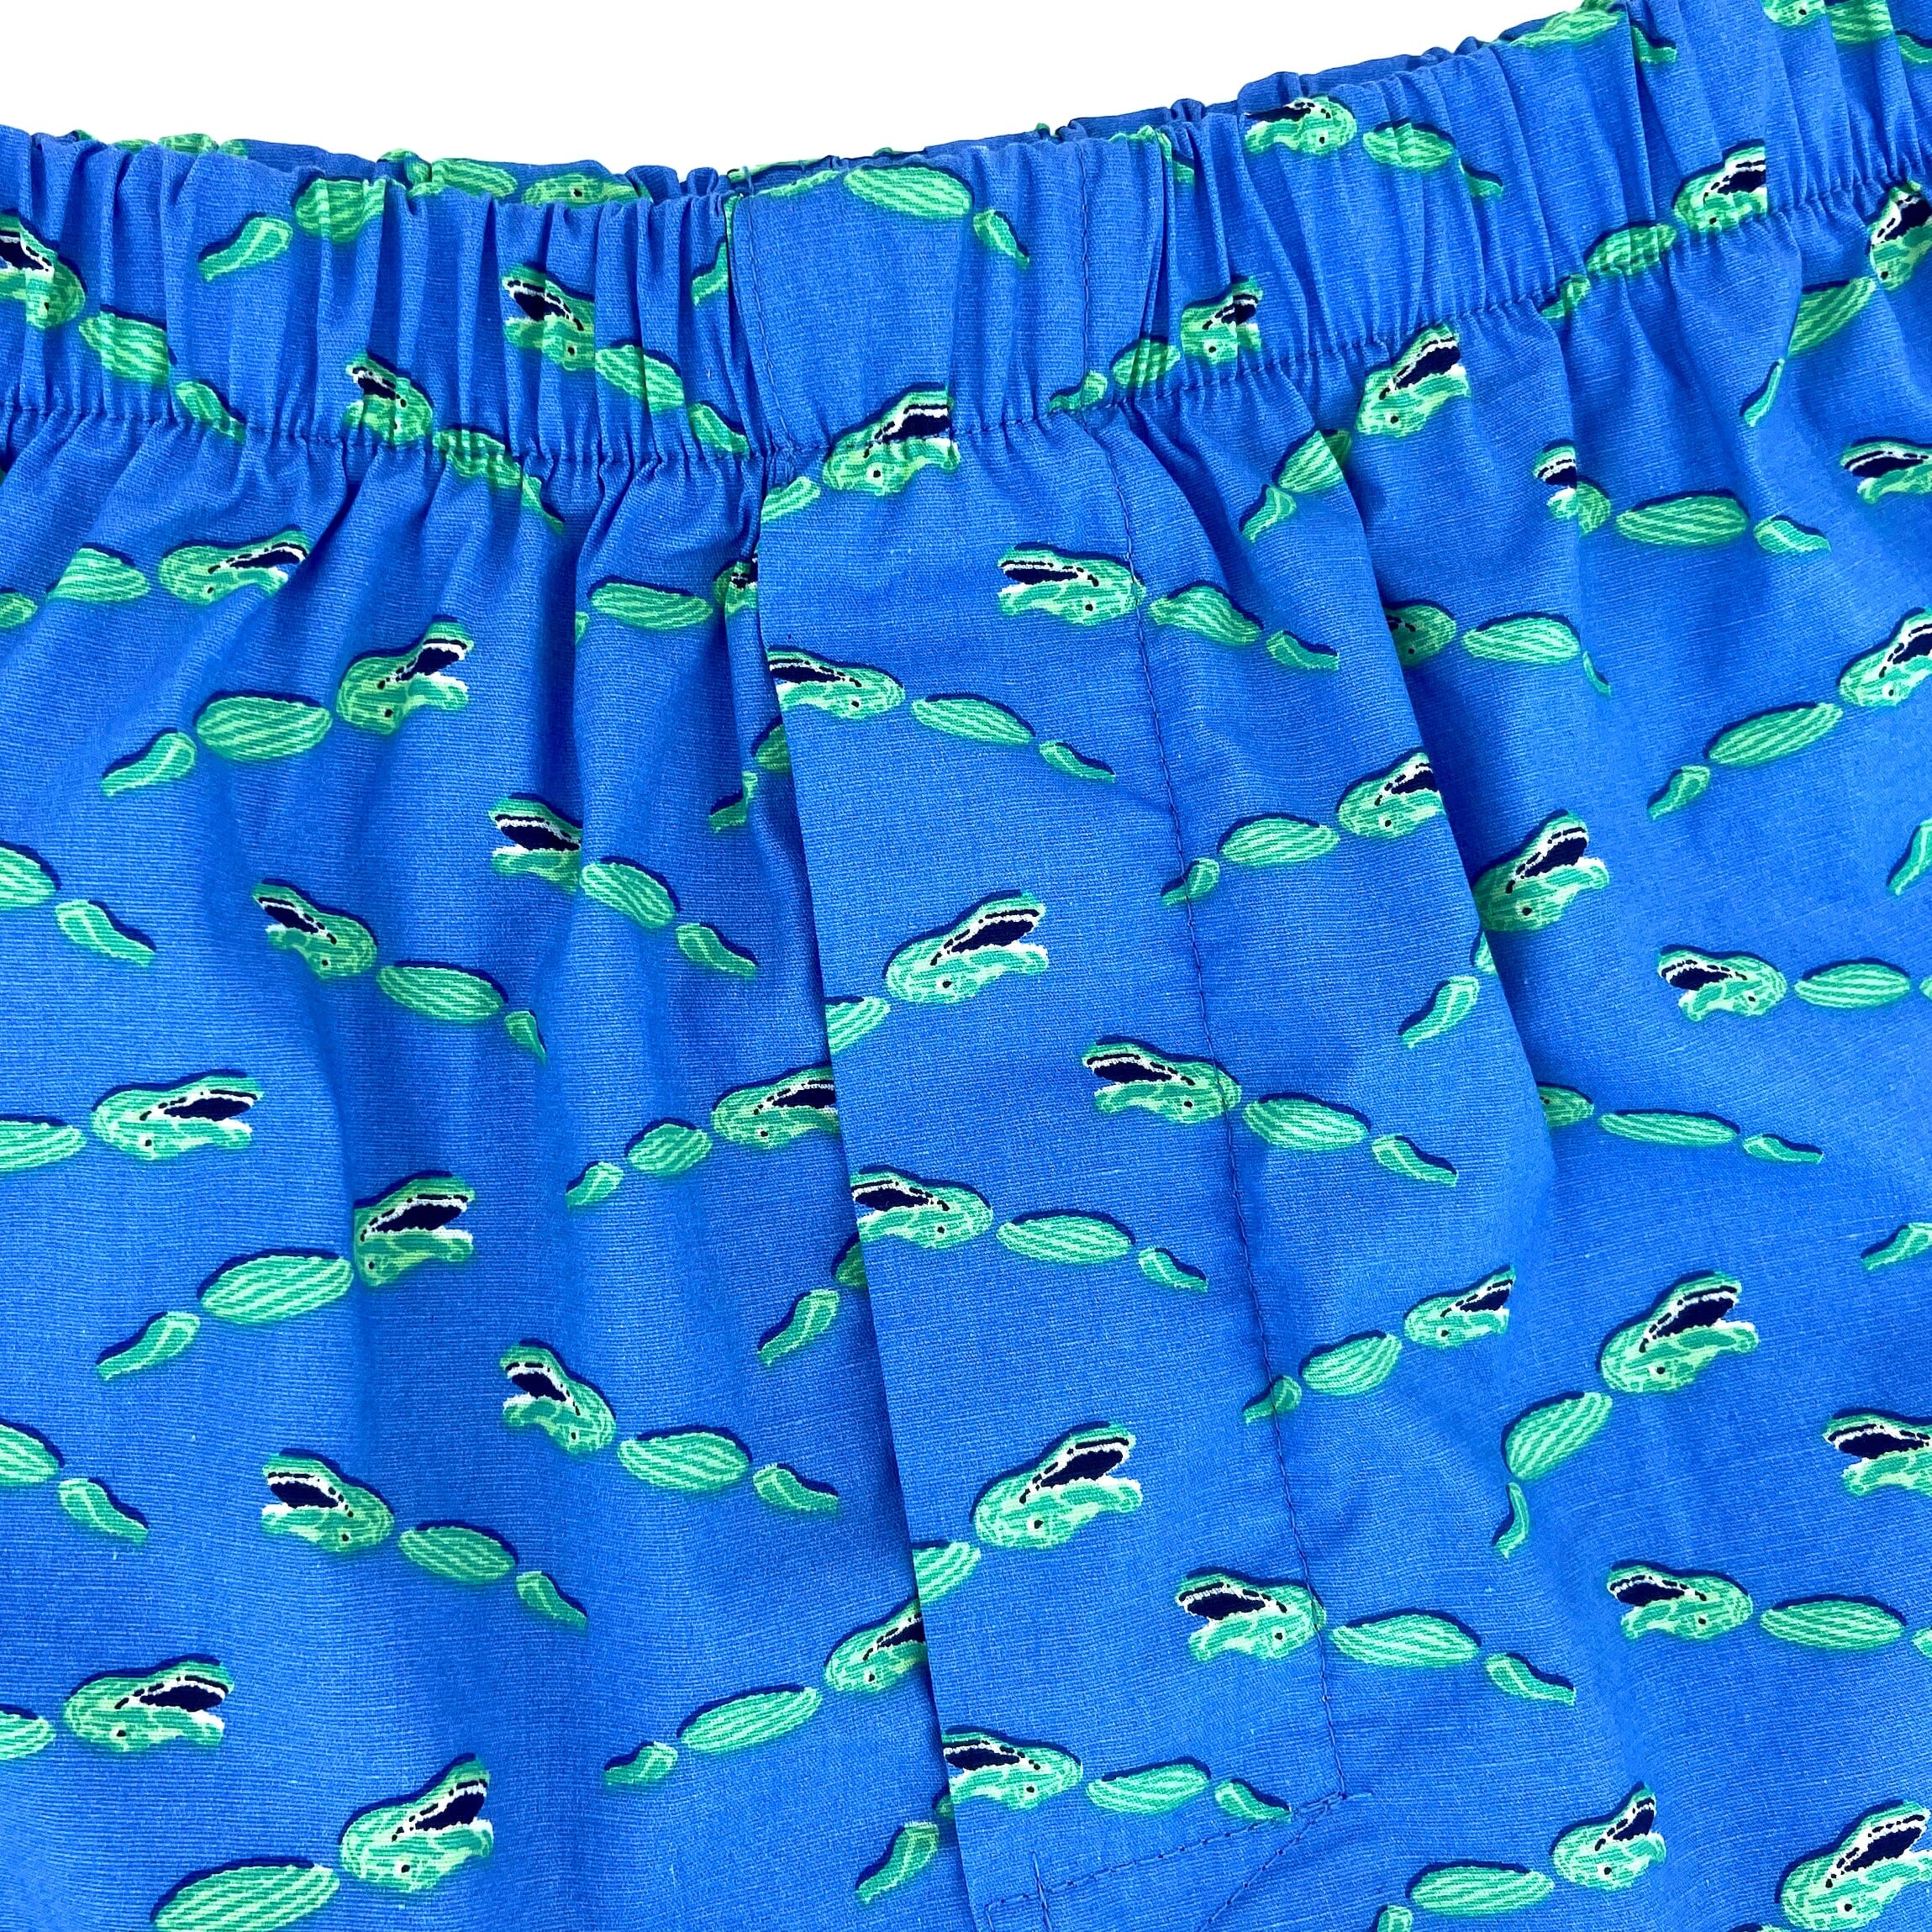 Crocodile River Alligator Novelty Print Cotton Boxer Shorts Underwear